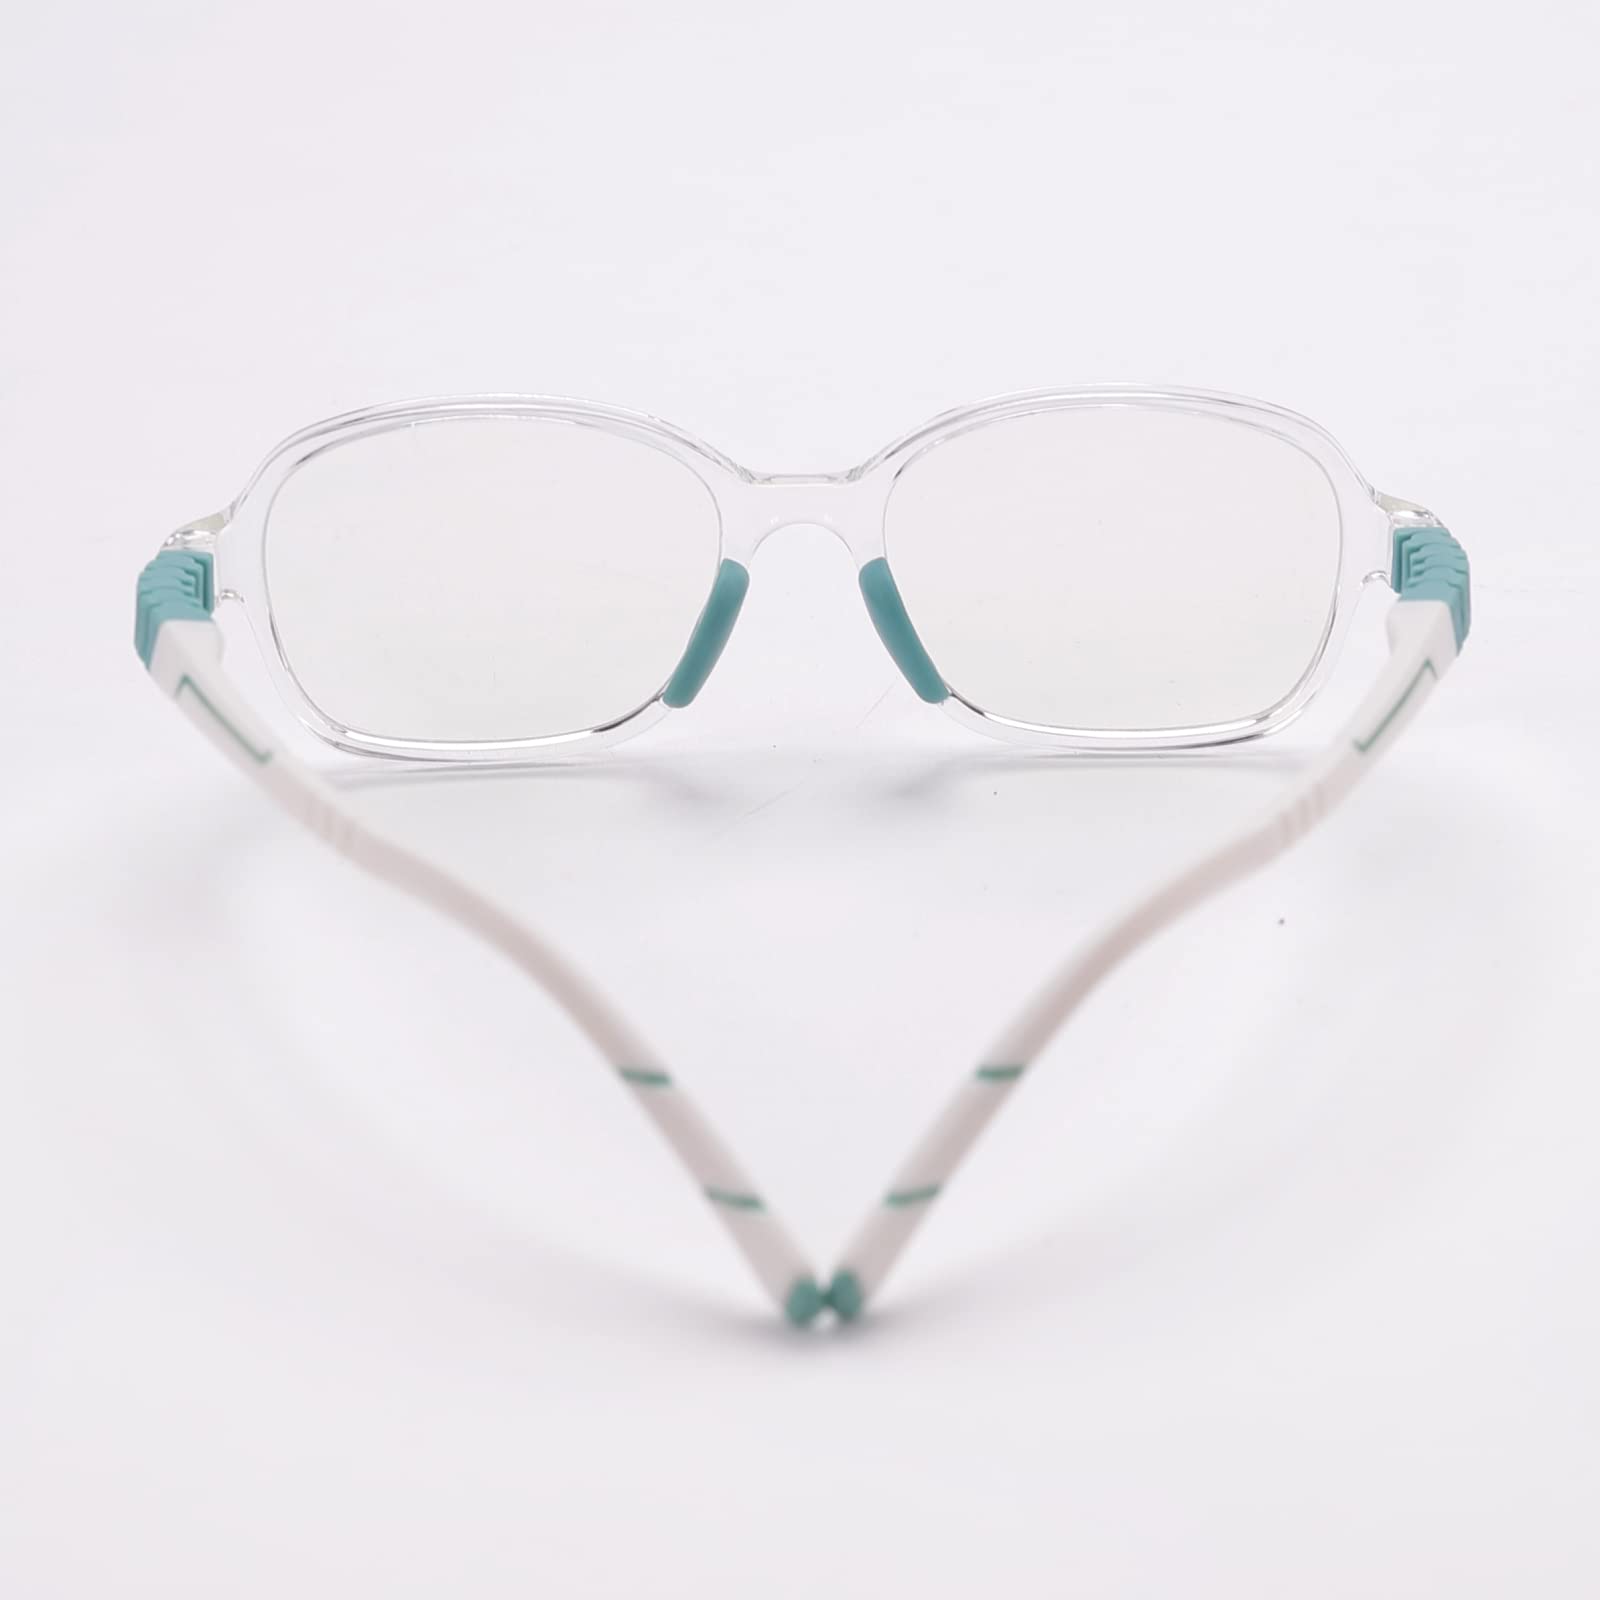 Intellilens Round Kids Computer Glasses for Eye Protection | Zero Power, Anti Glare & Blue Light Filter Glasses | Blue Cut Lenses for Boys and Girls (Transparent) (46-15-130)